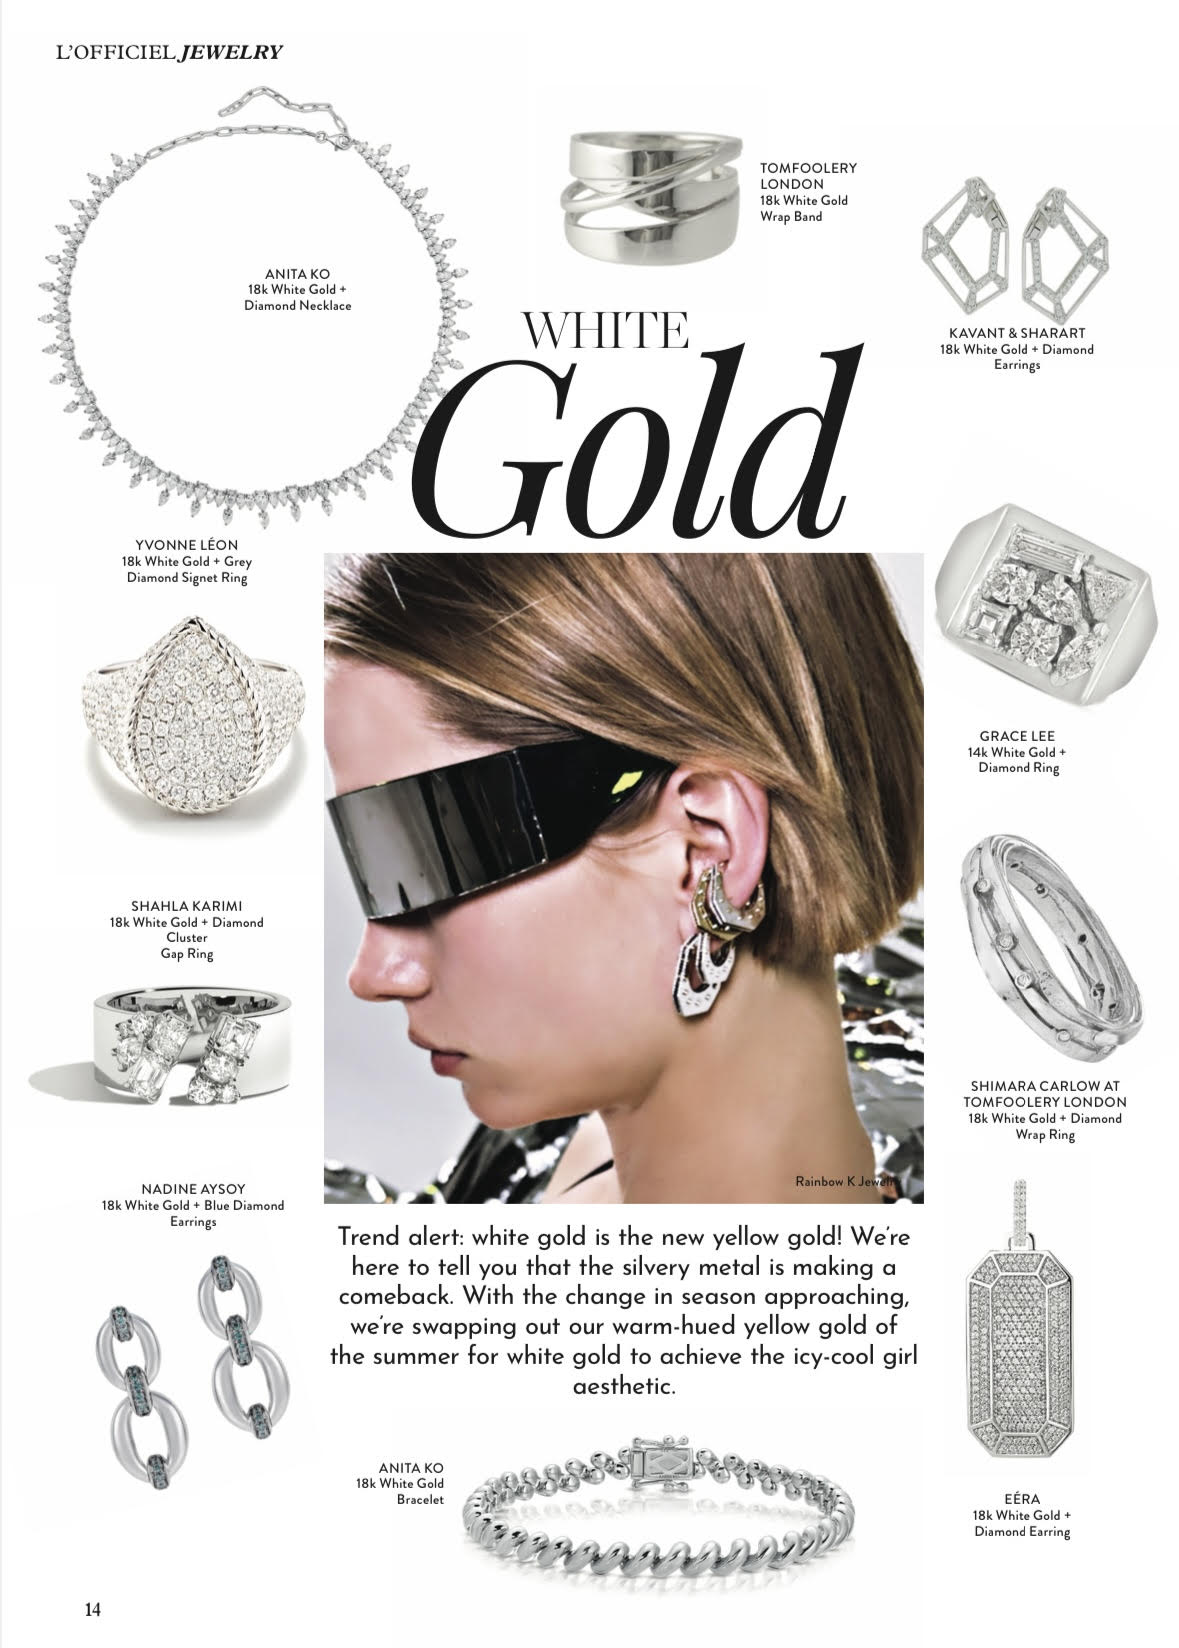 GOLDEN SUN JEWELRY: Hand picked diamonds elegantly set into this original  Louis Vuitton belt buckle, m…